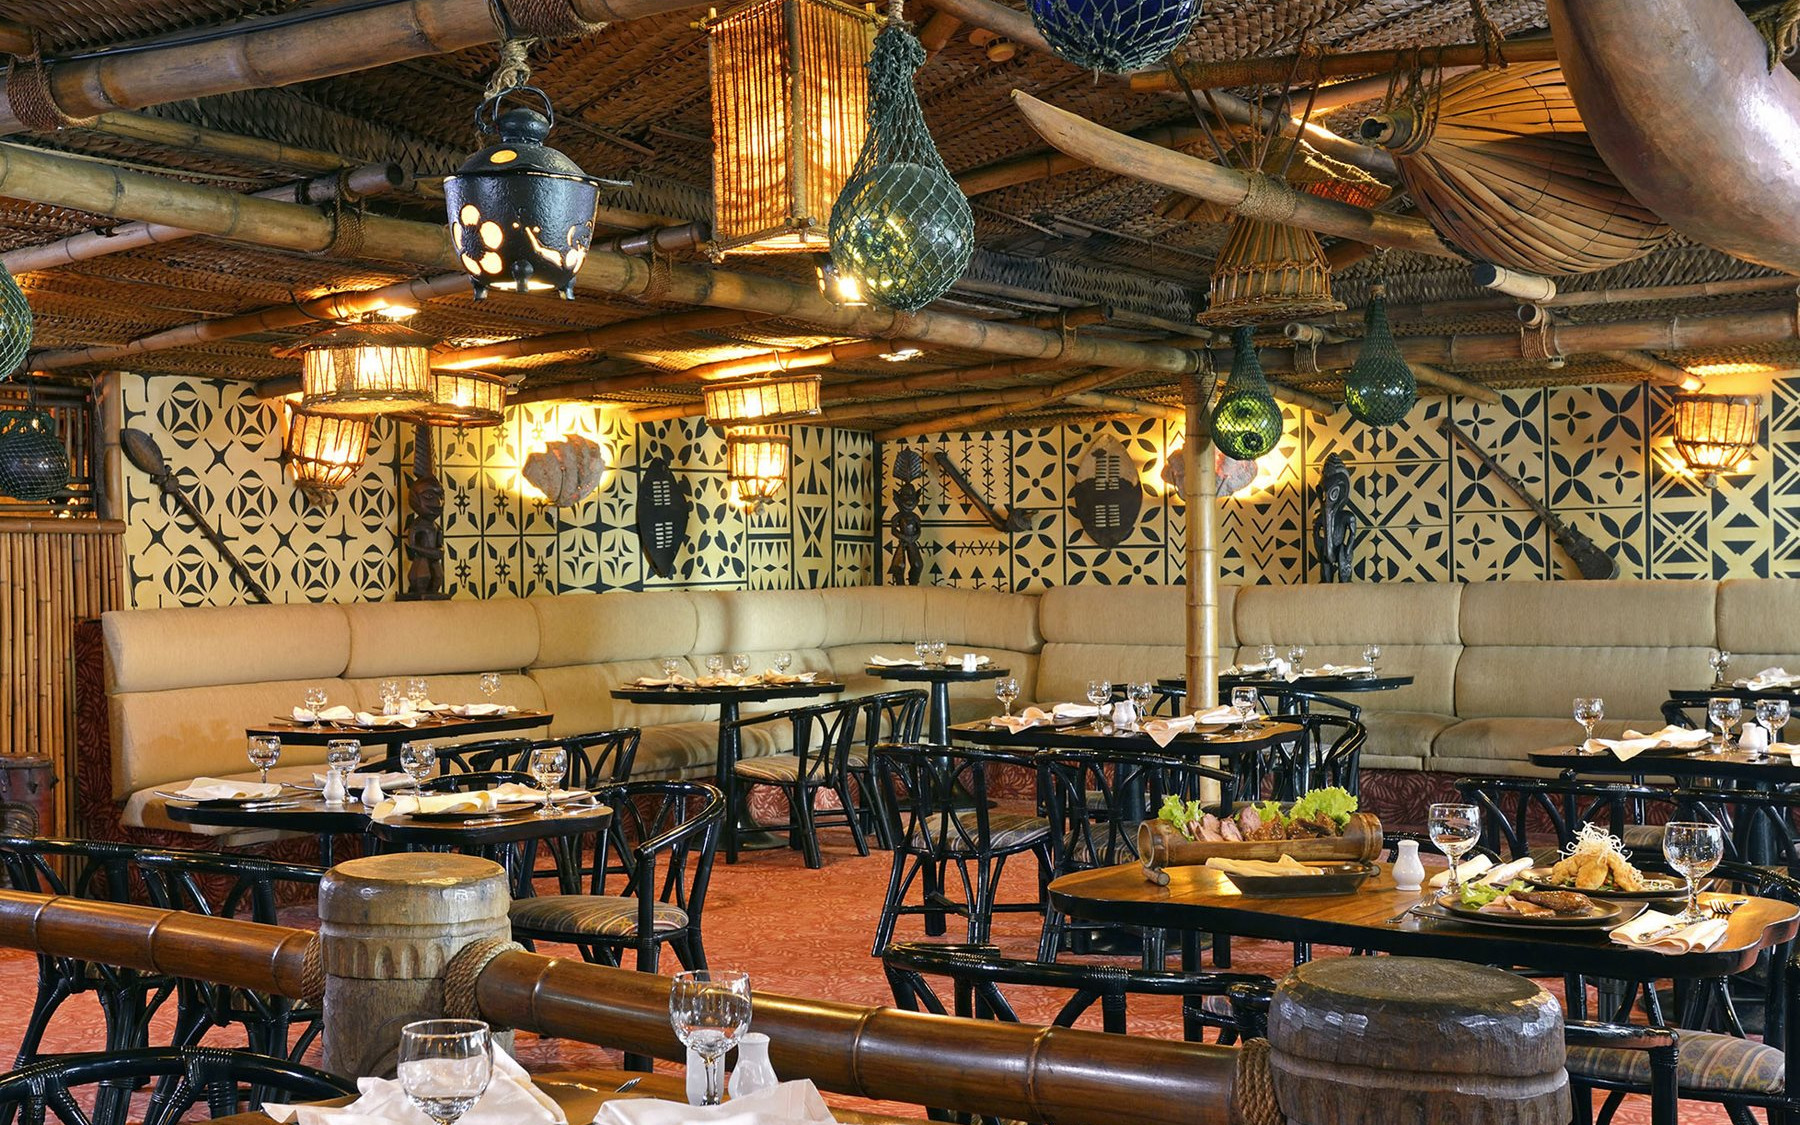 Polinesio restaurant